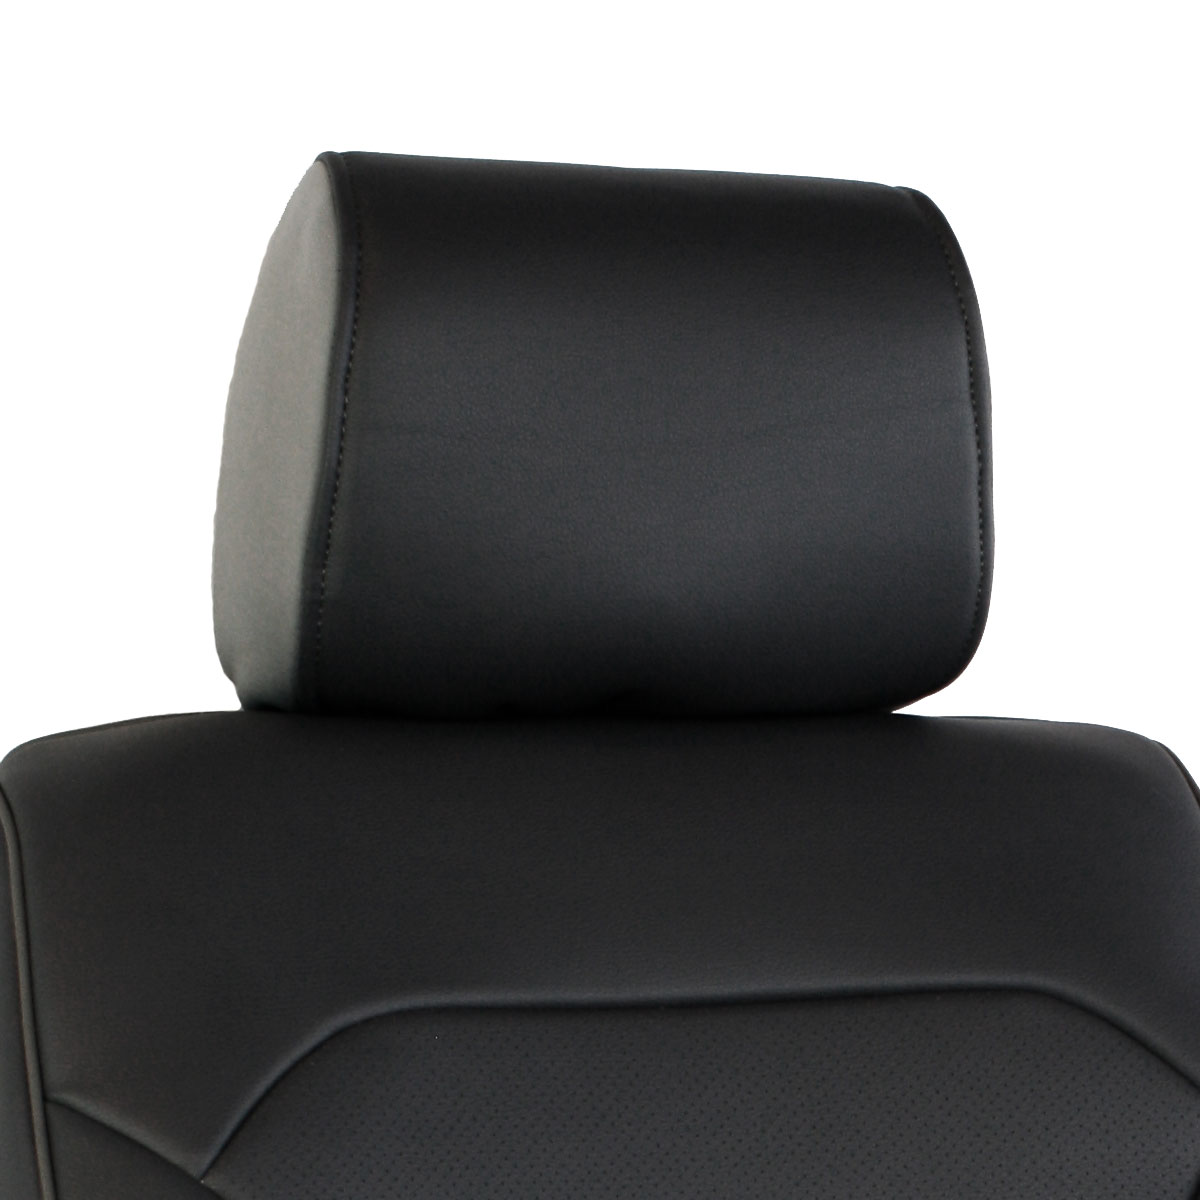 Leatherette Headrest Covers - Premium Quality